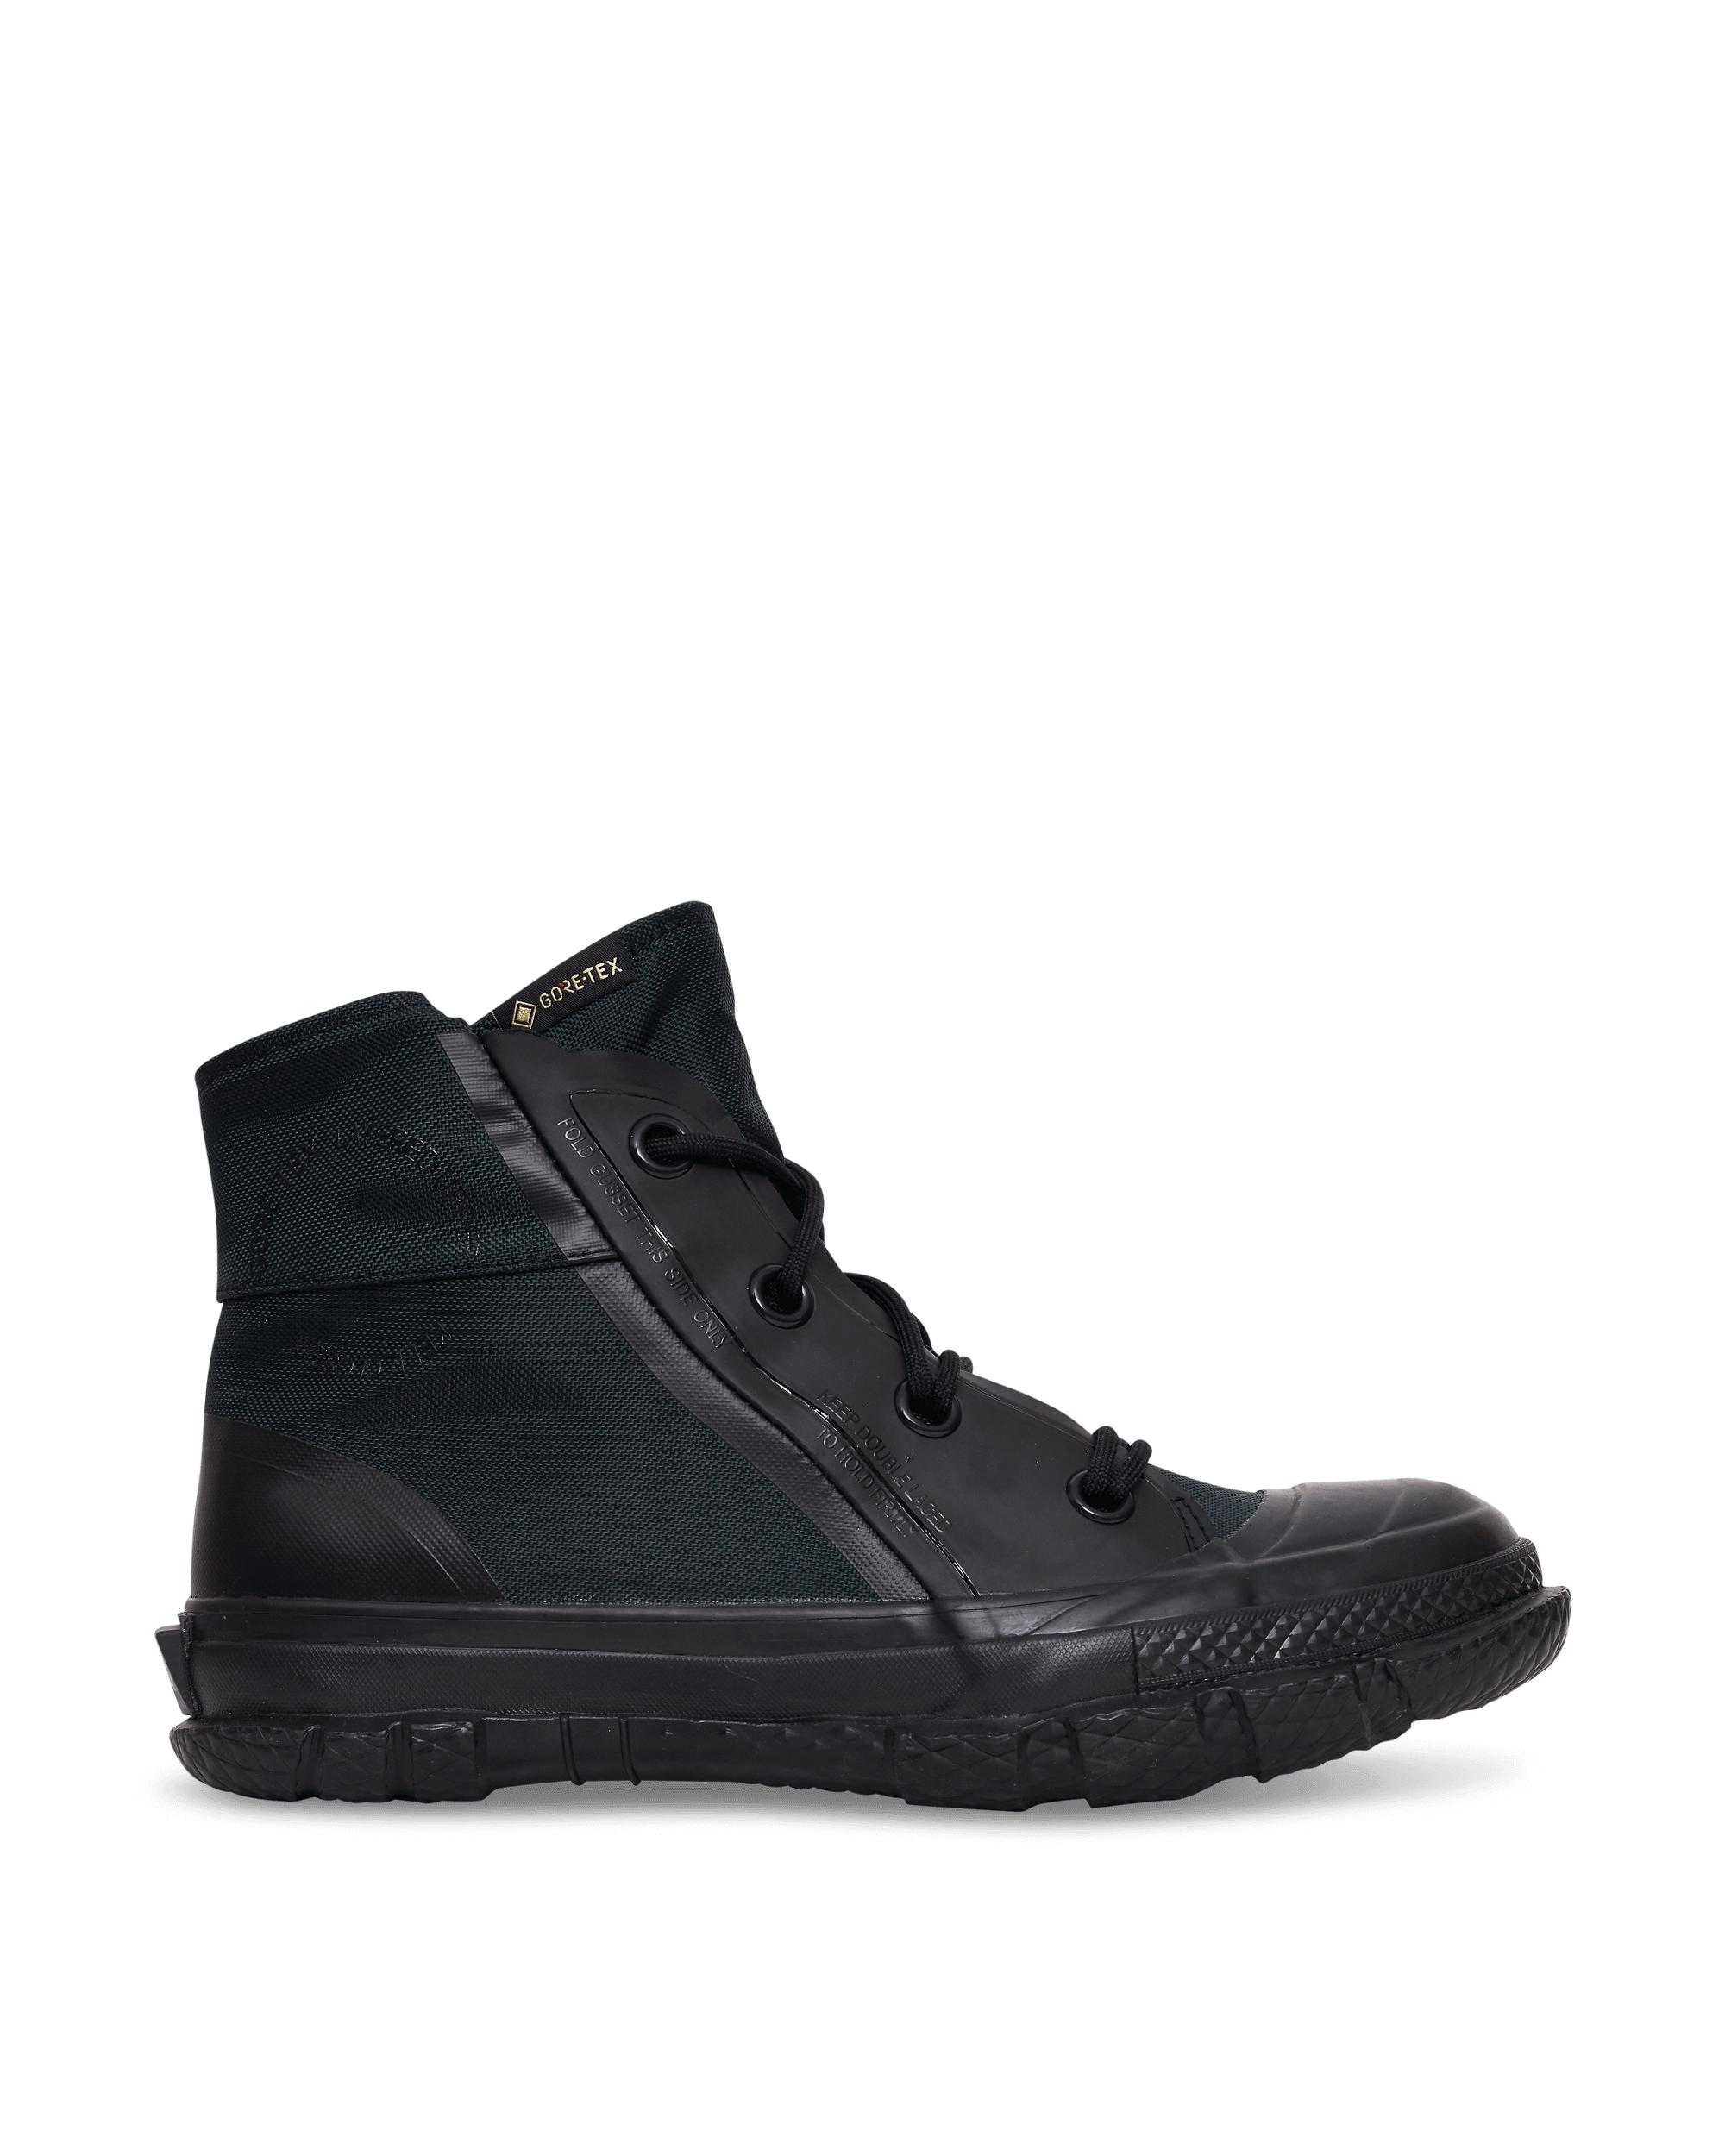 Converse Synthetic Chuck Taylor Mc18 Gore-tex Sneakers in Black/Black/Black  (Black) for Men - Lyst